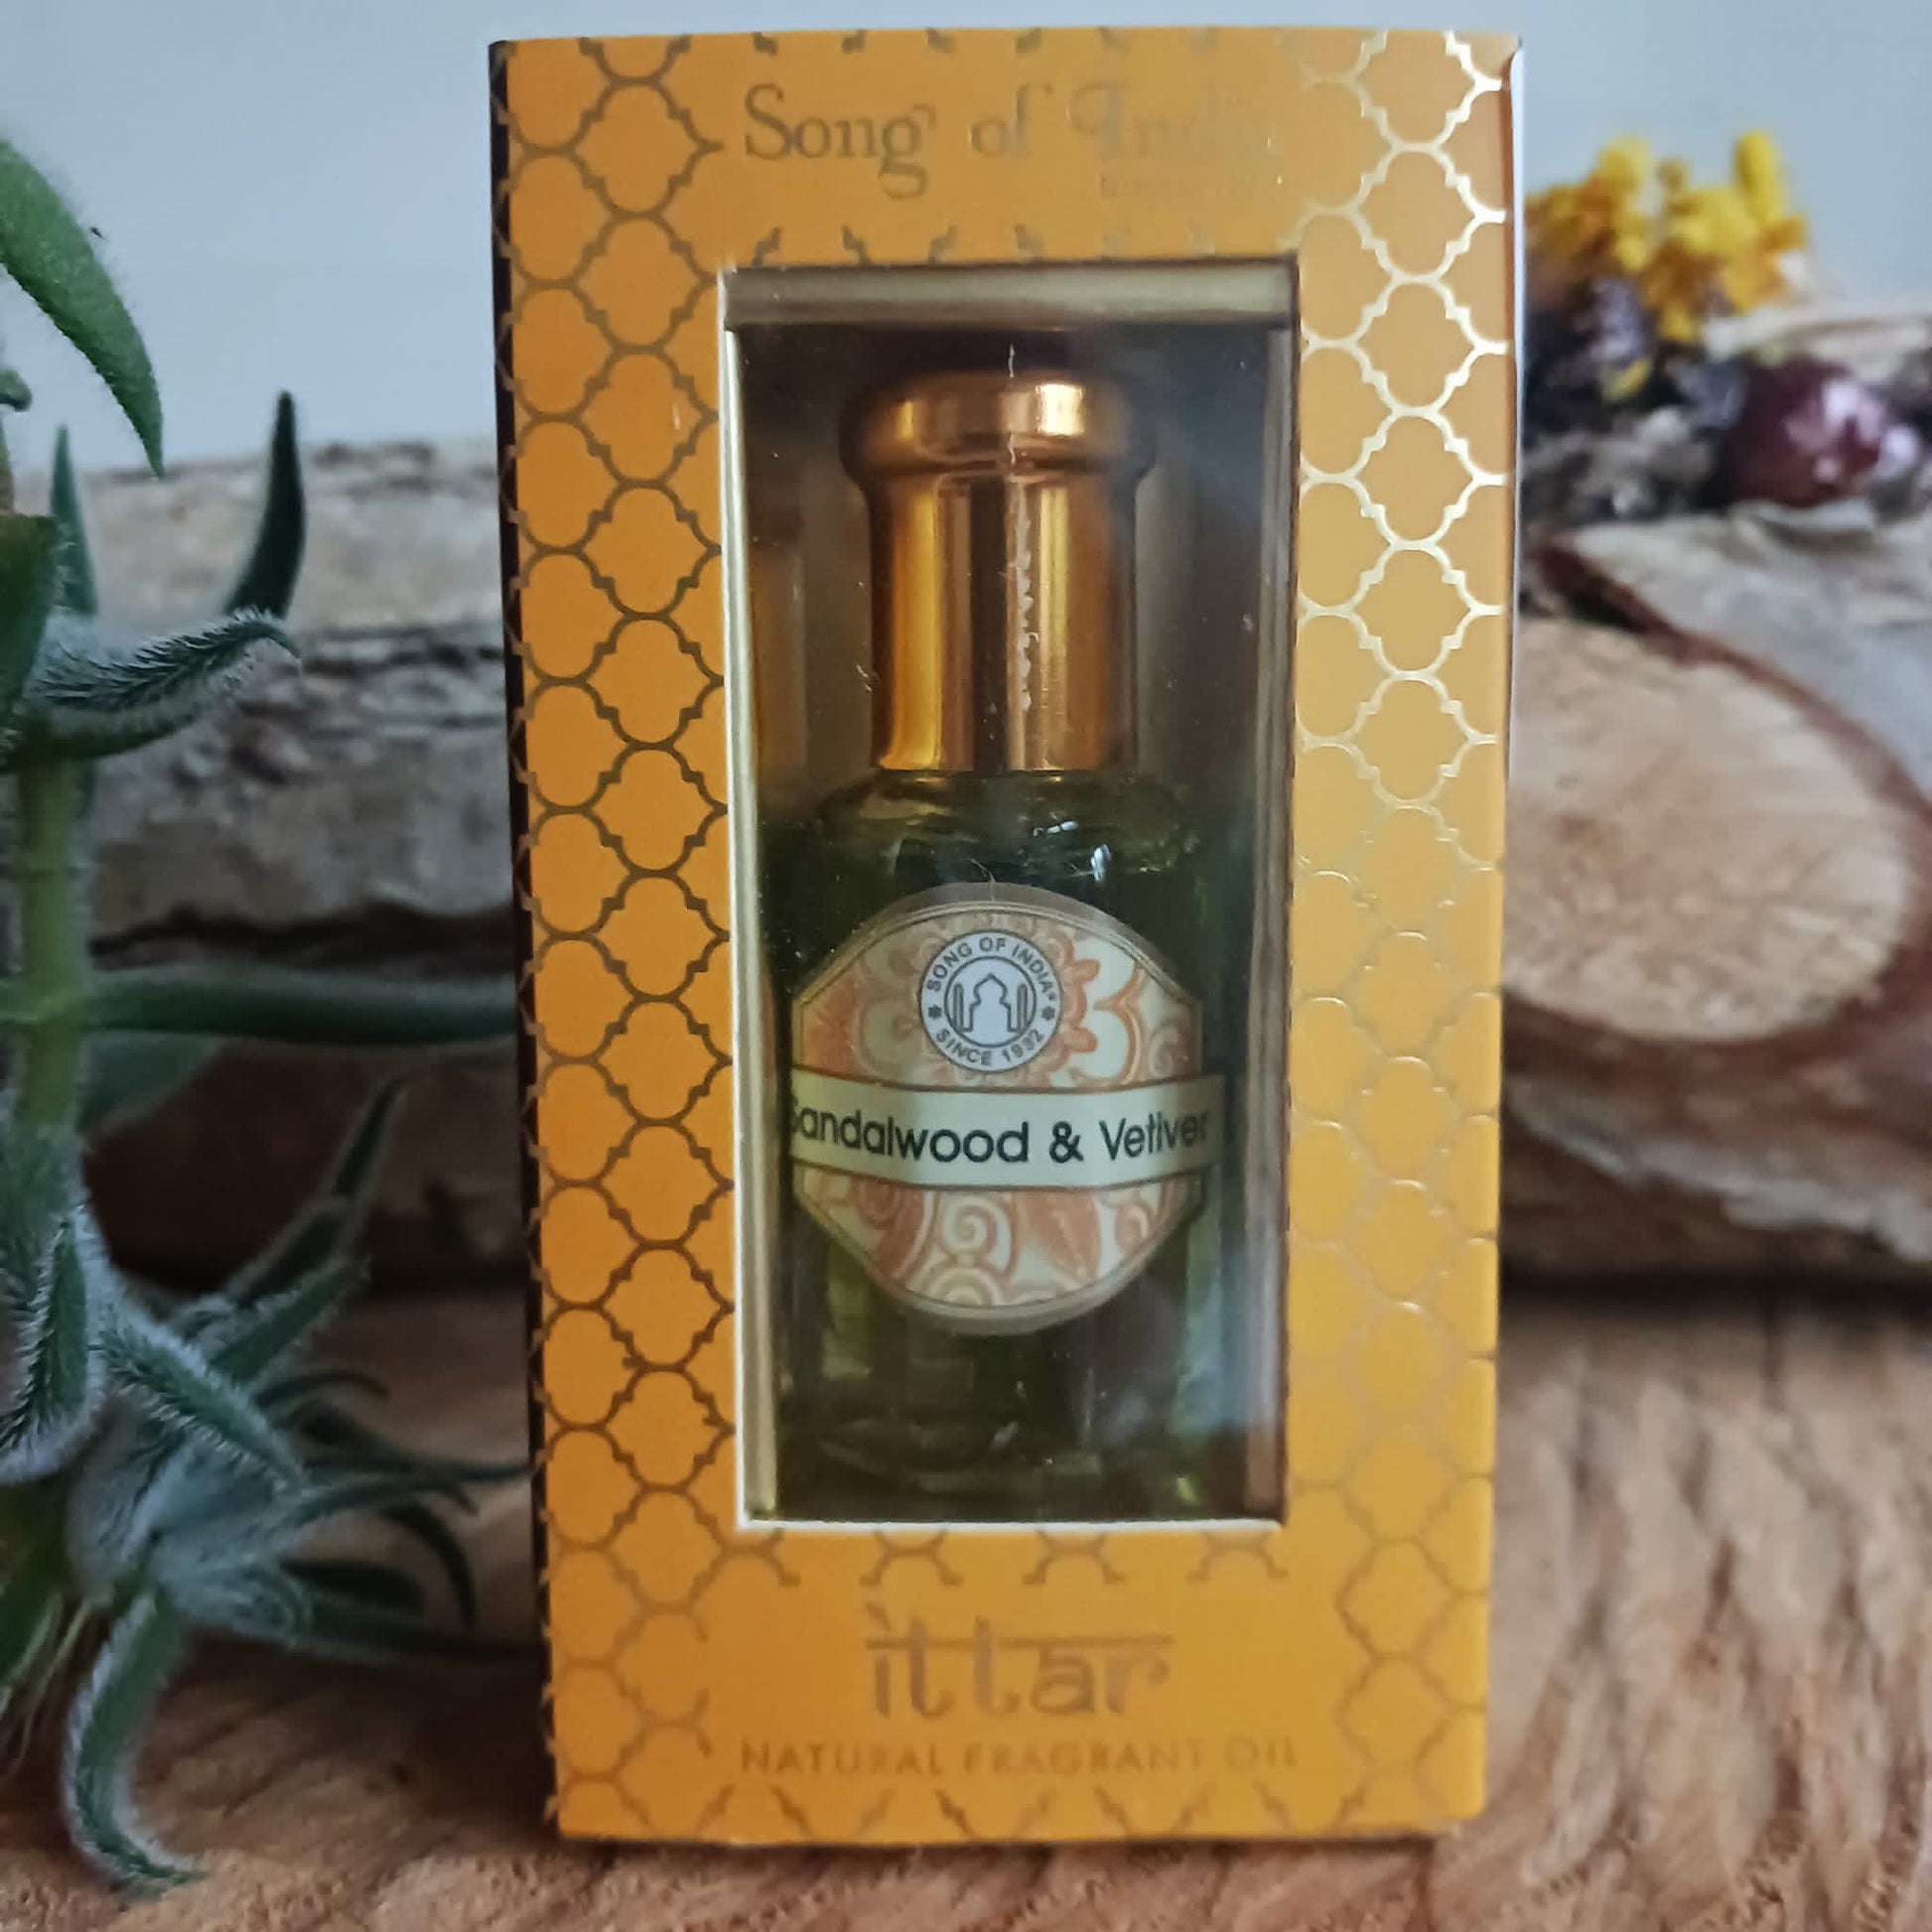 Song of India | Sandalwood Vetiver Ayurveda Fragrance Oil